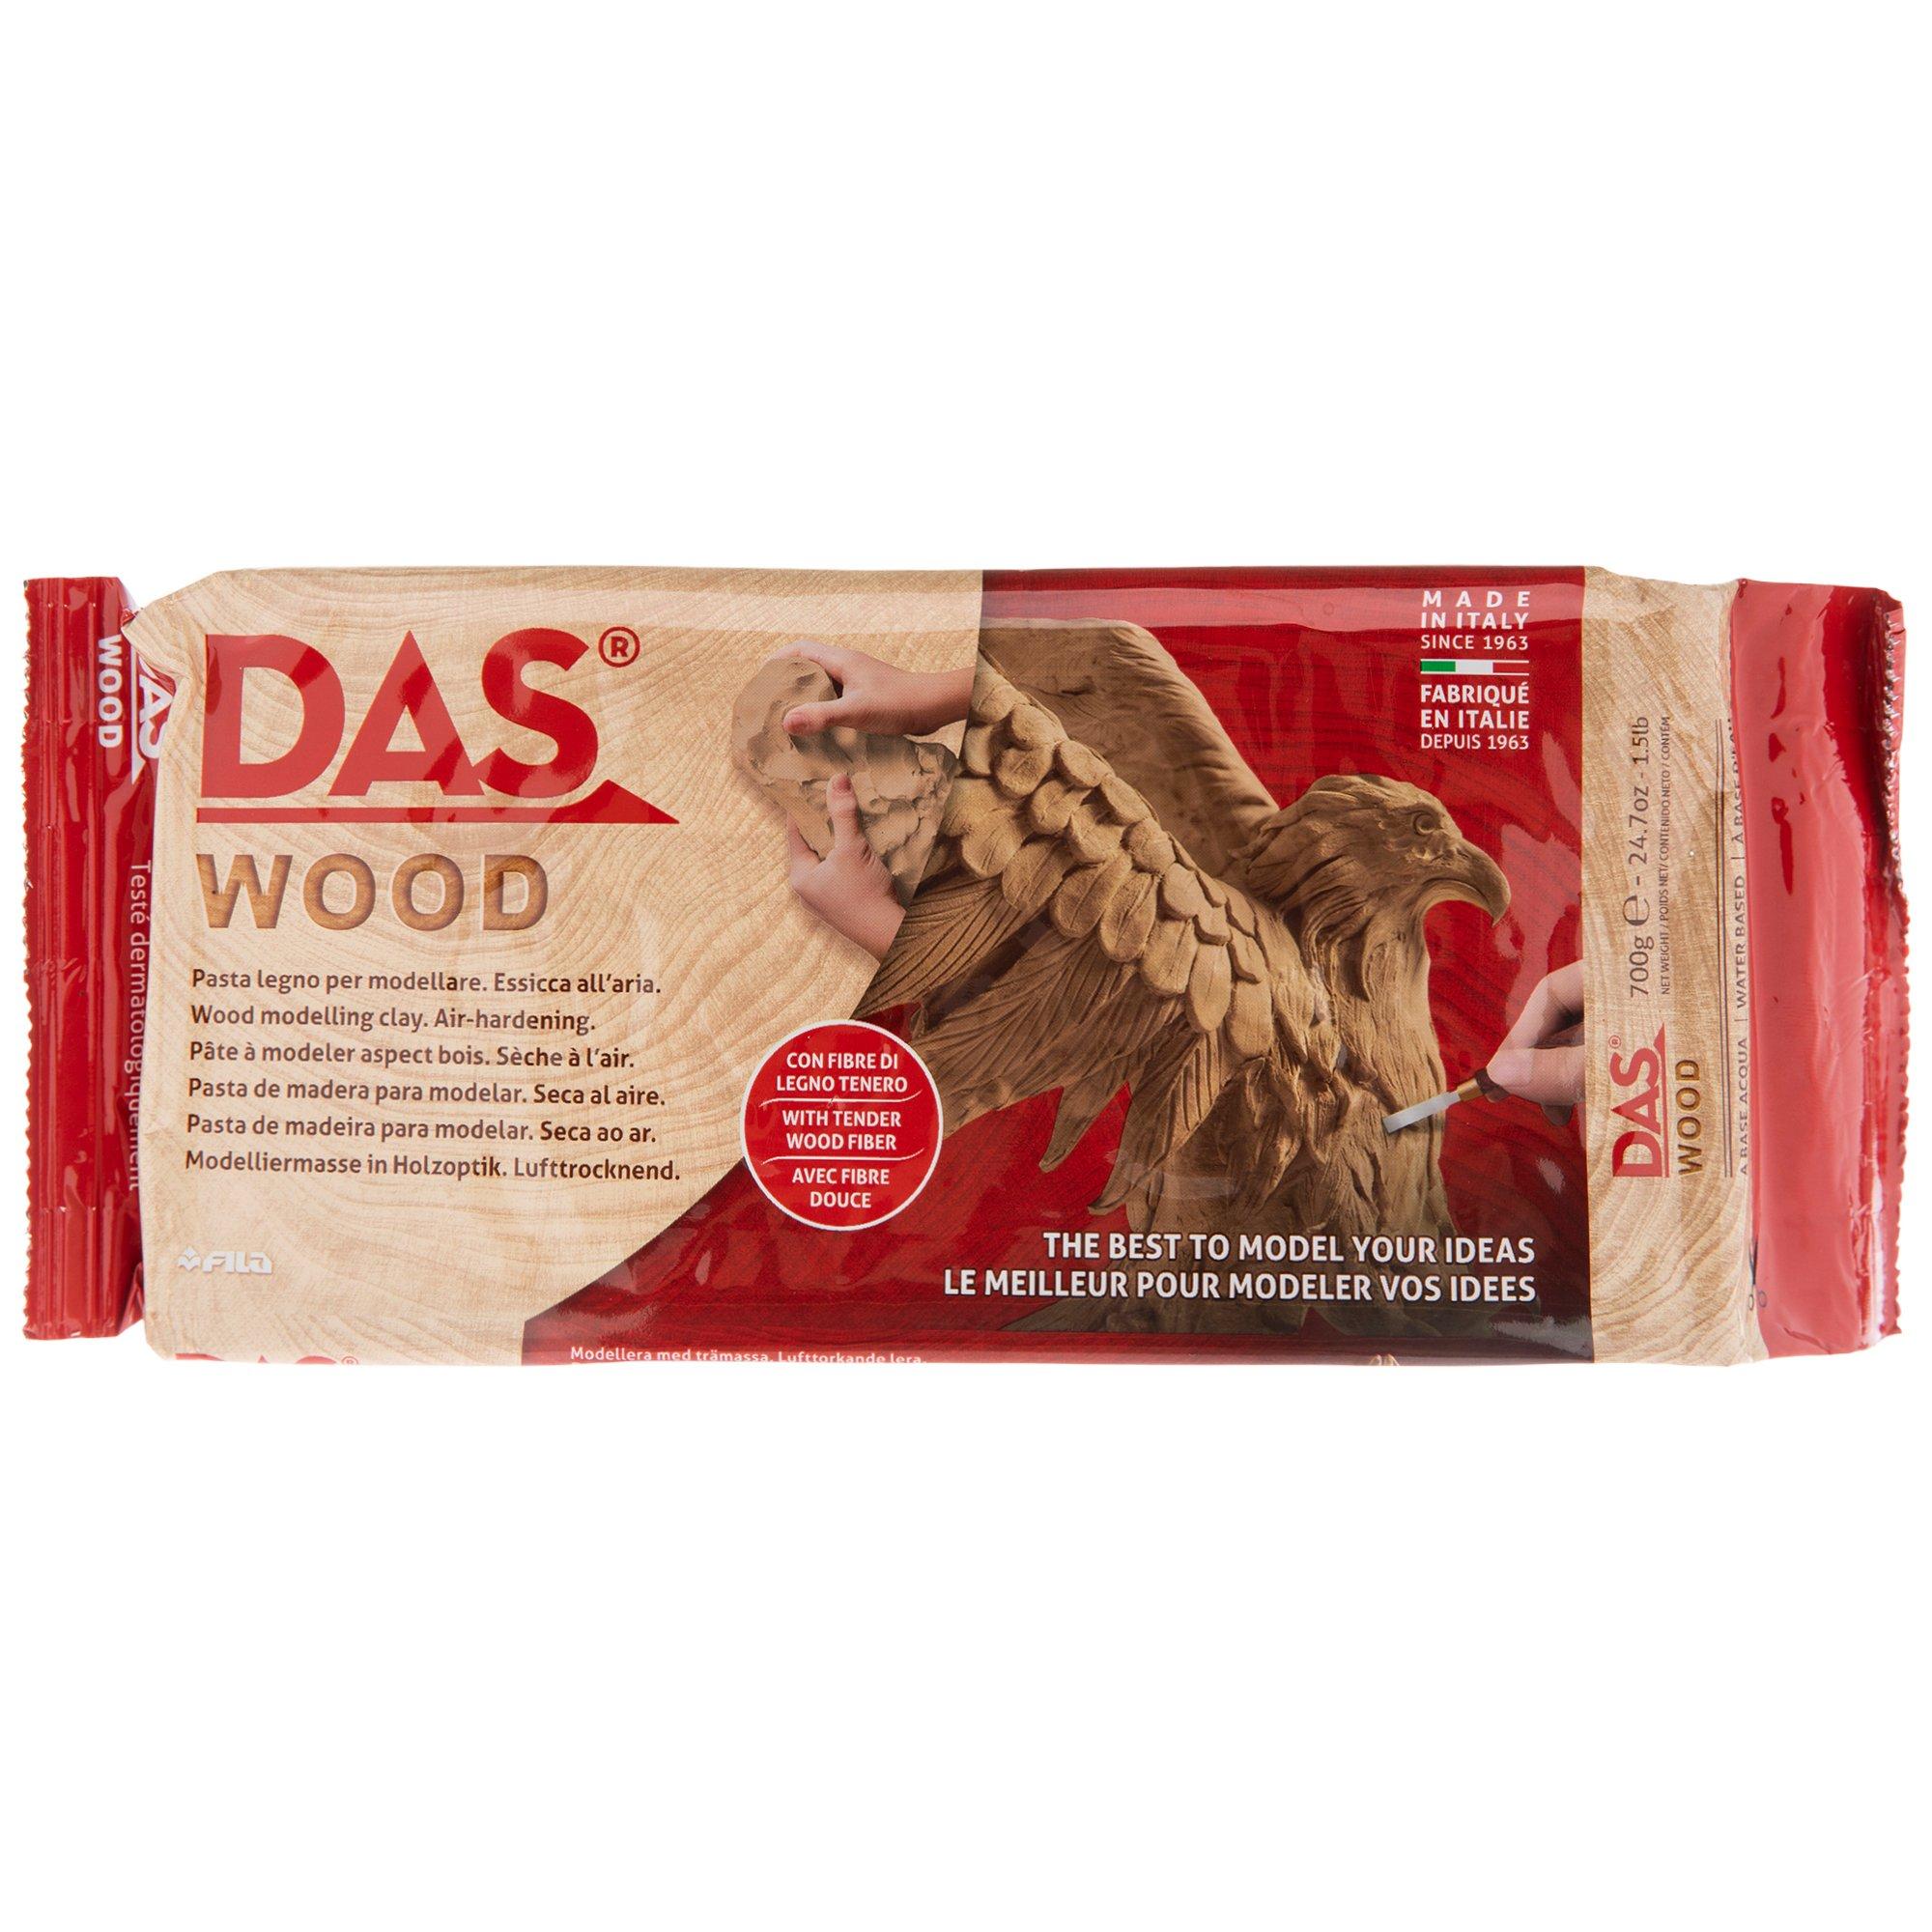 DAS Air Dry Clay Modeling Clay